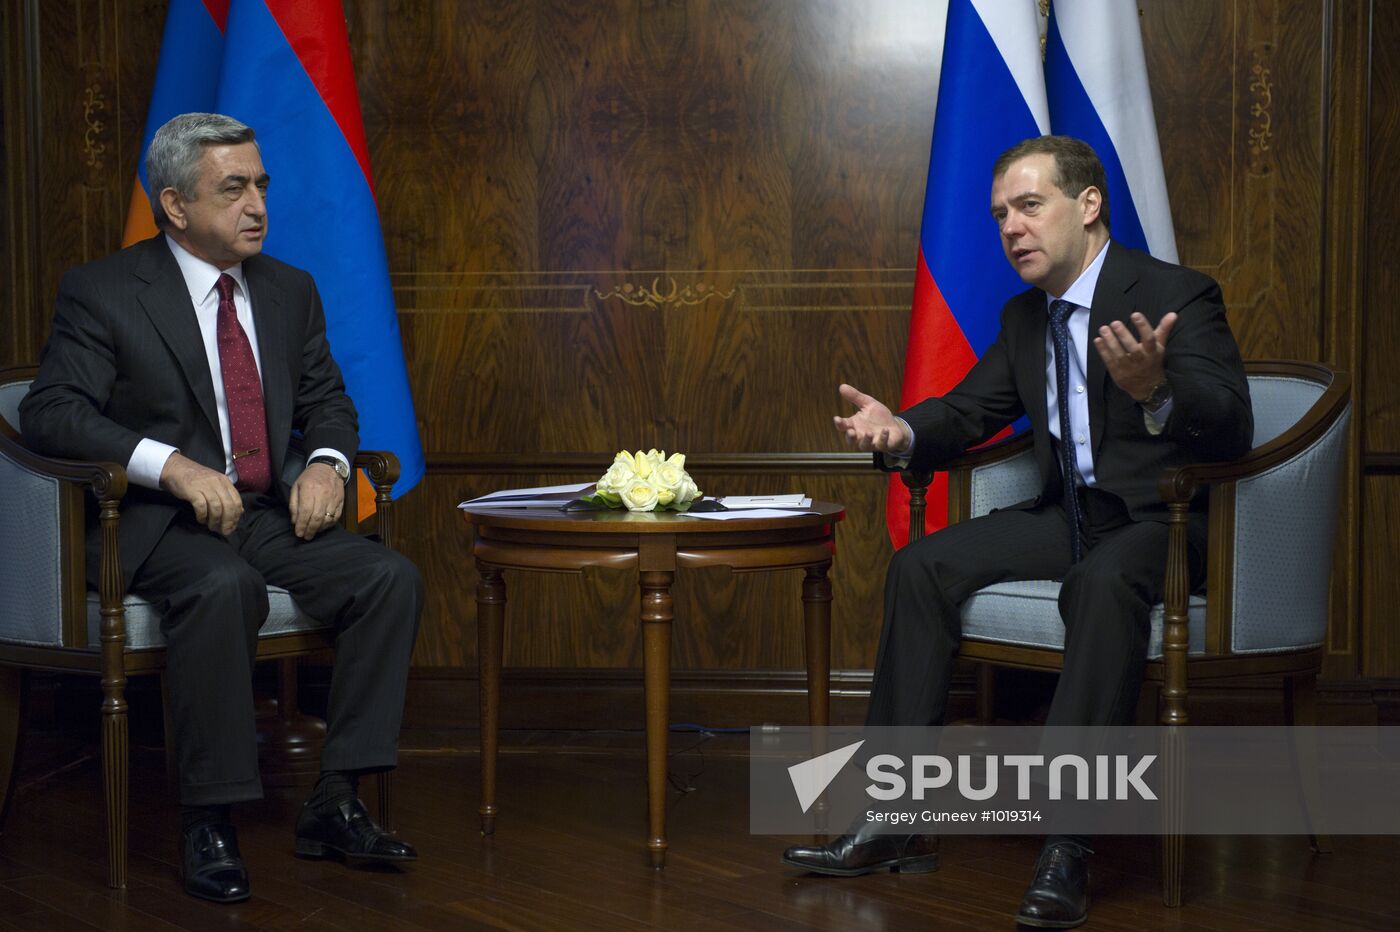 D.Medvedev meets with S.Sargsyan